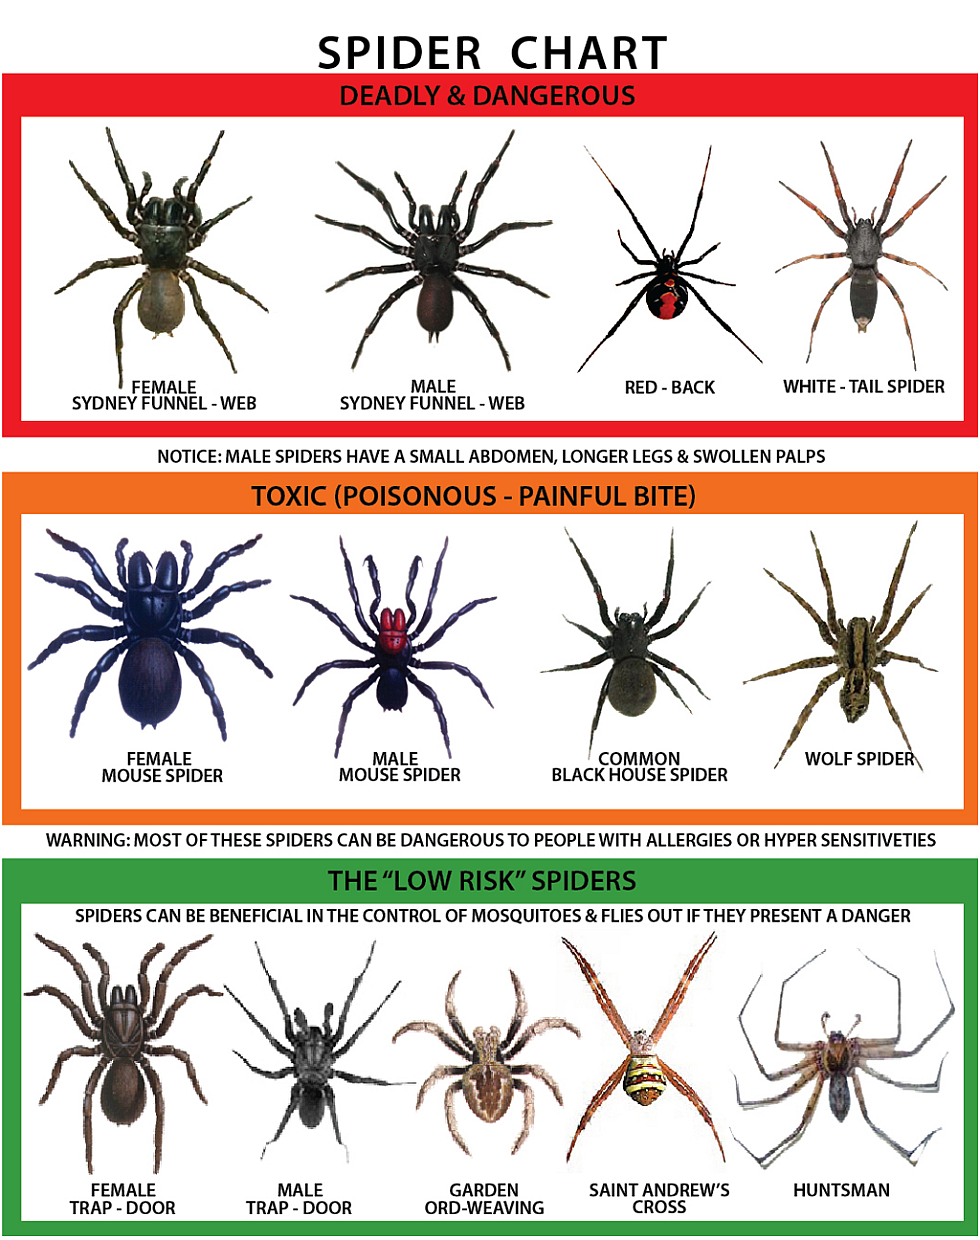 Newcastle Kill A Pest - Pest Control & Termite Inspections | home goods store | 2 Sturdee St, New Lambton NSW 2305, Australia | 0249112366 OR +61 2 4911 2366